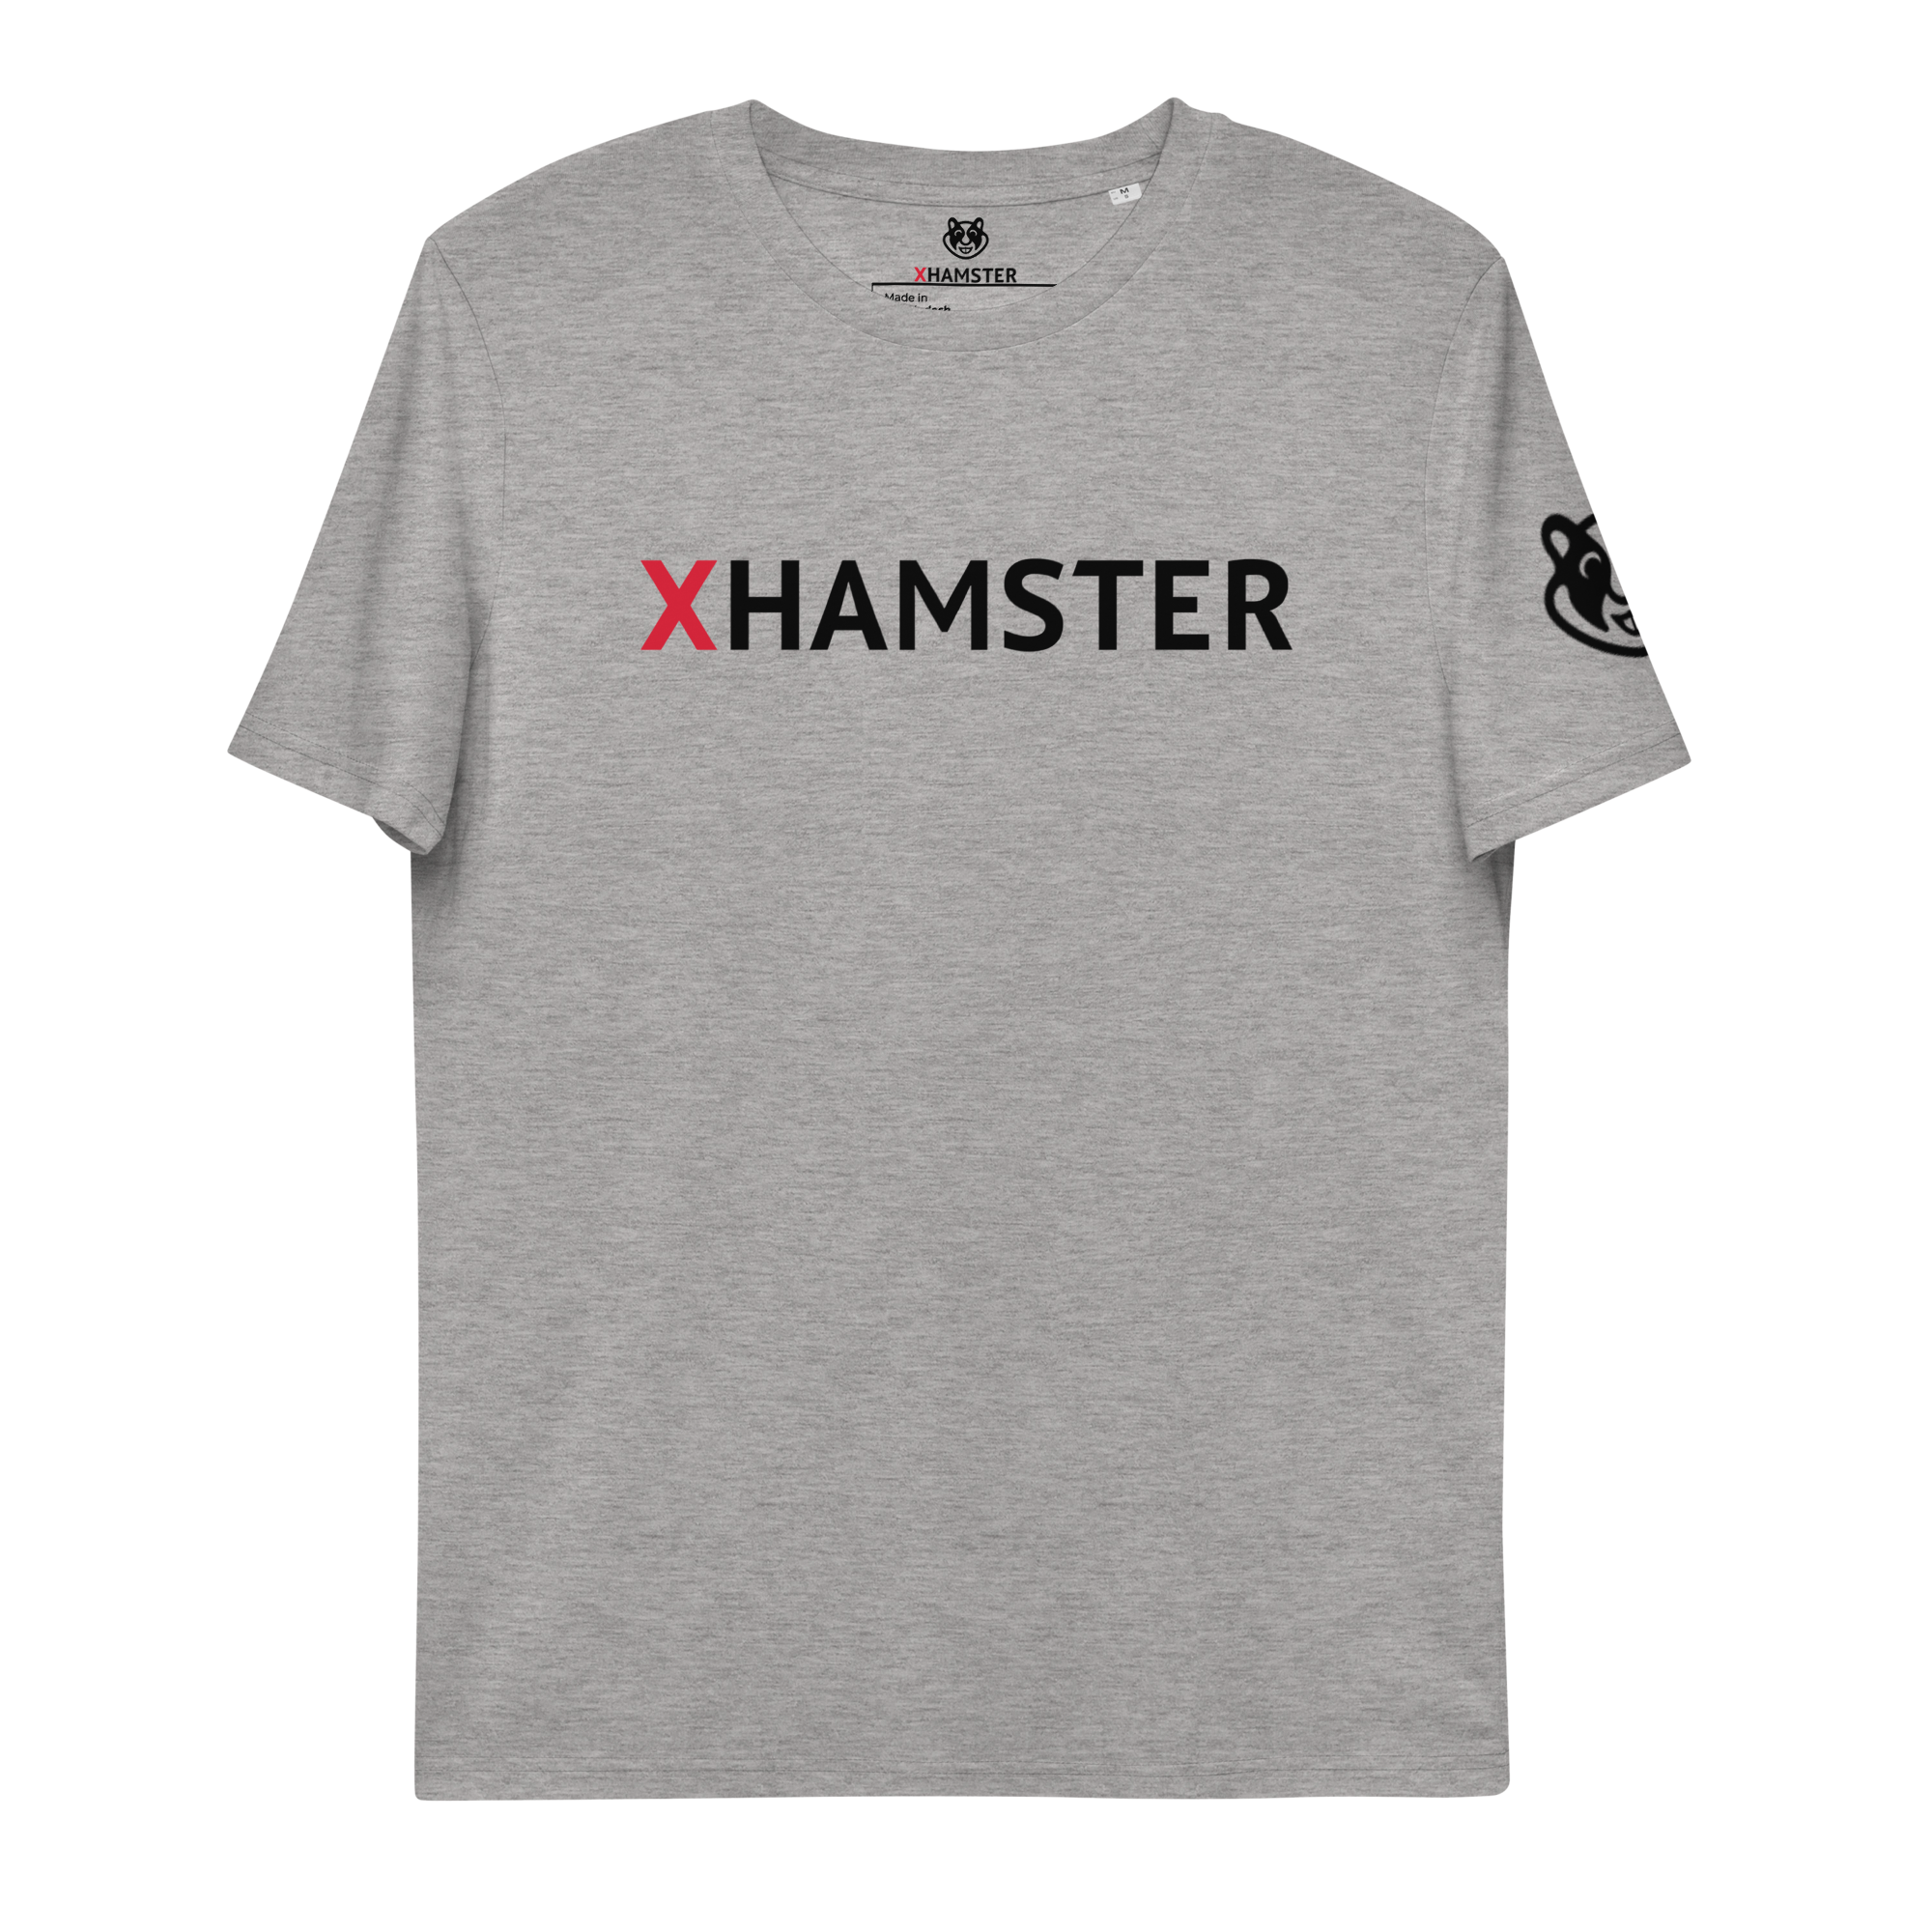 xHamster Unisex Cotton T-shirt (Grey)